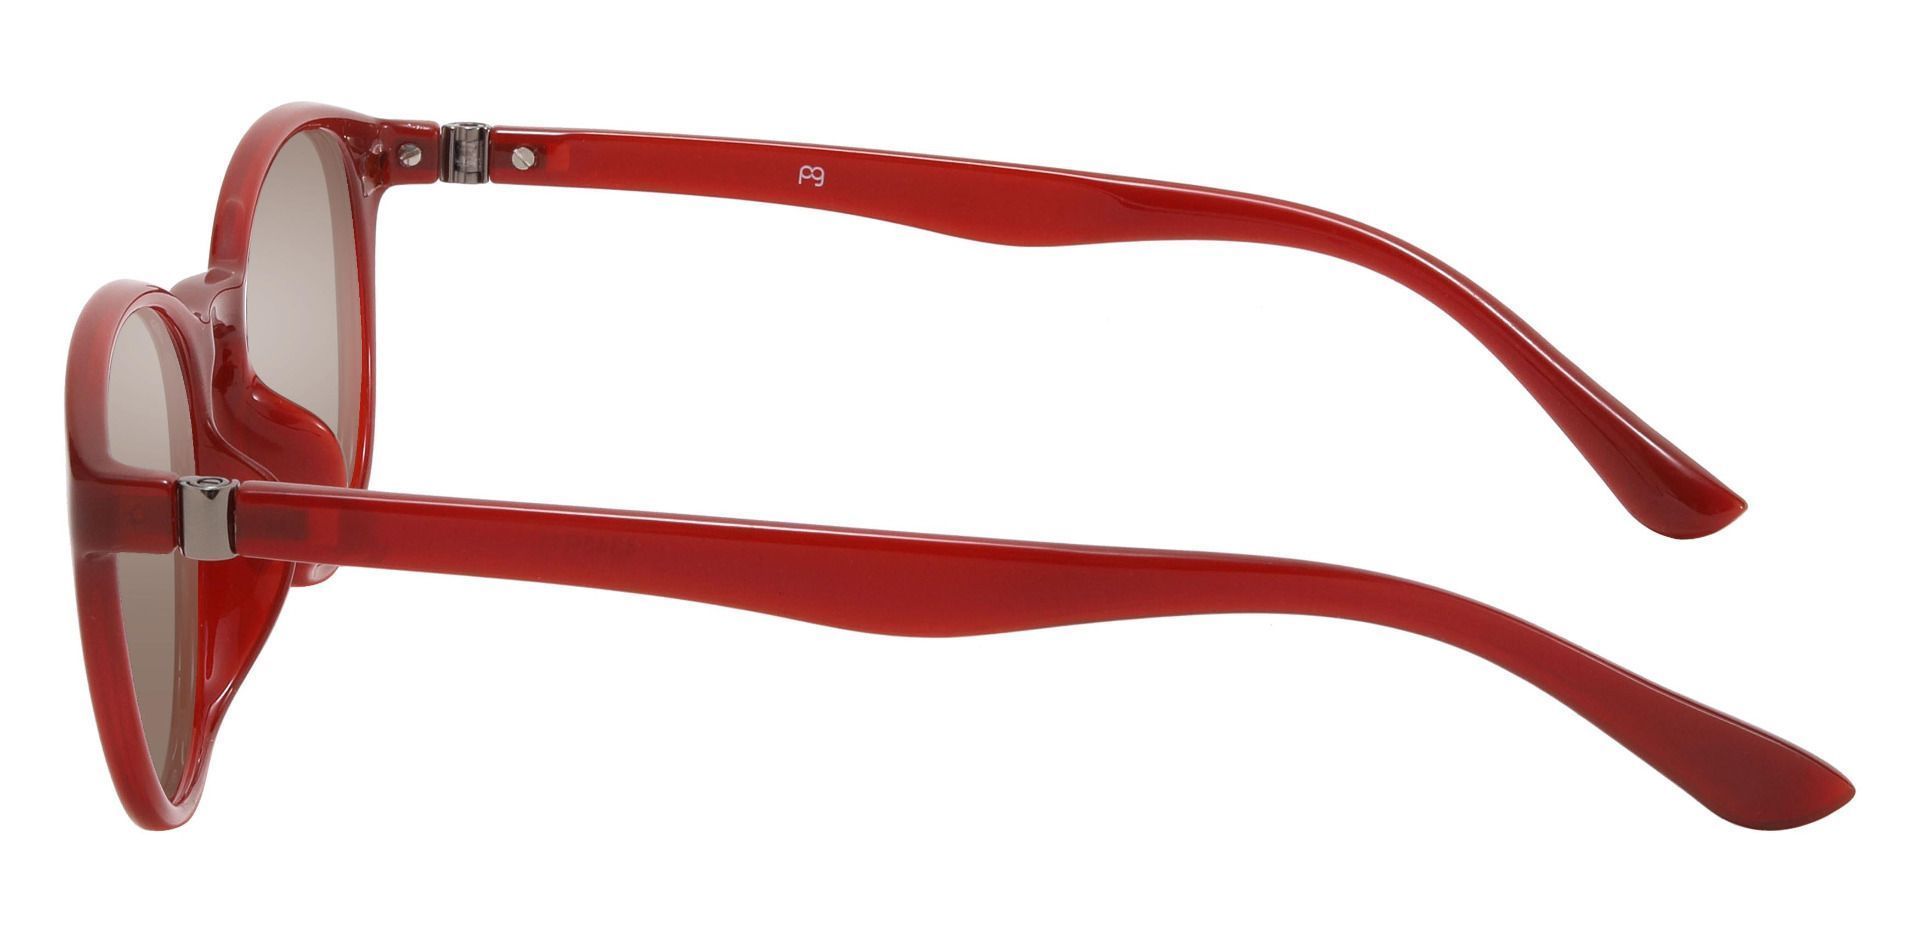 Celia Oval Prescription Sunglasses - Red Frame With Brown Lenses